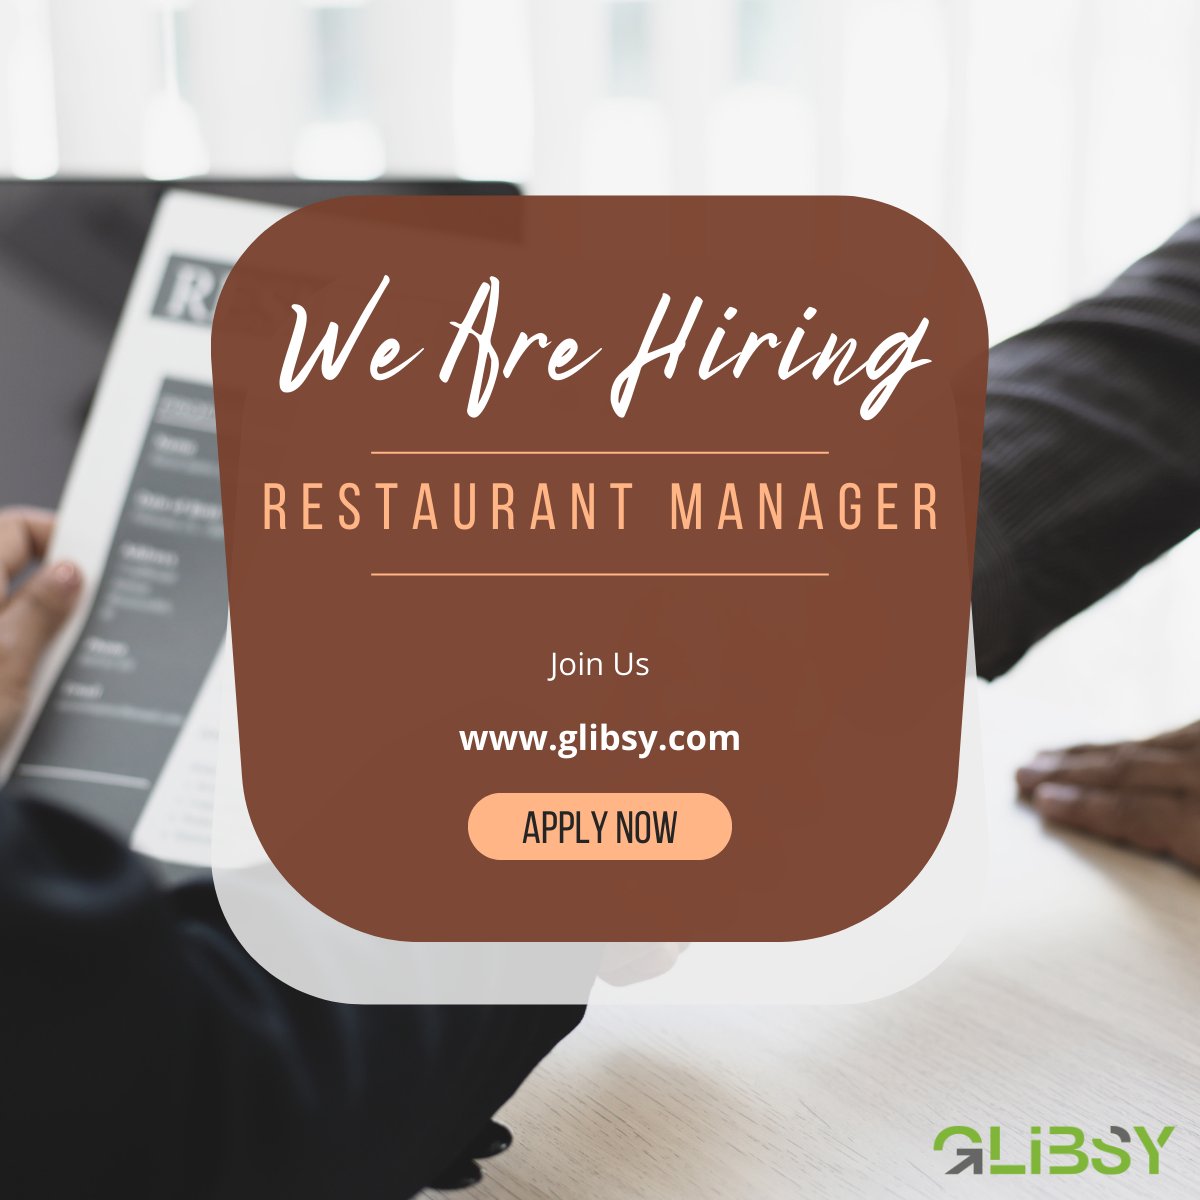 Apply Now!
Link: glibsy.com/in/en/jobs/662…
#hiring #hiringnow #keralajobs #restaurantmanager #restaurant